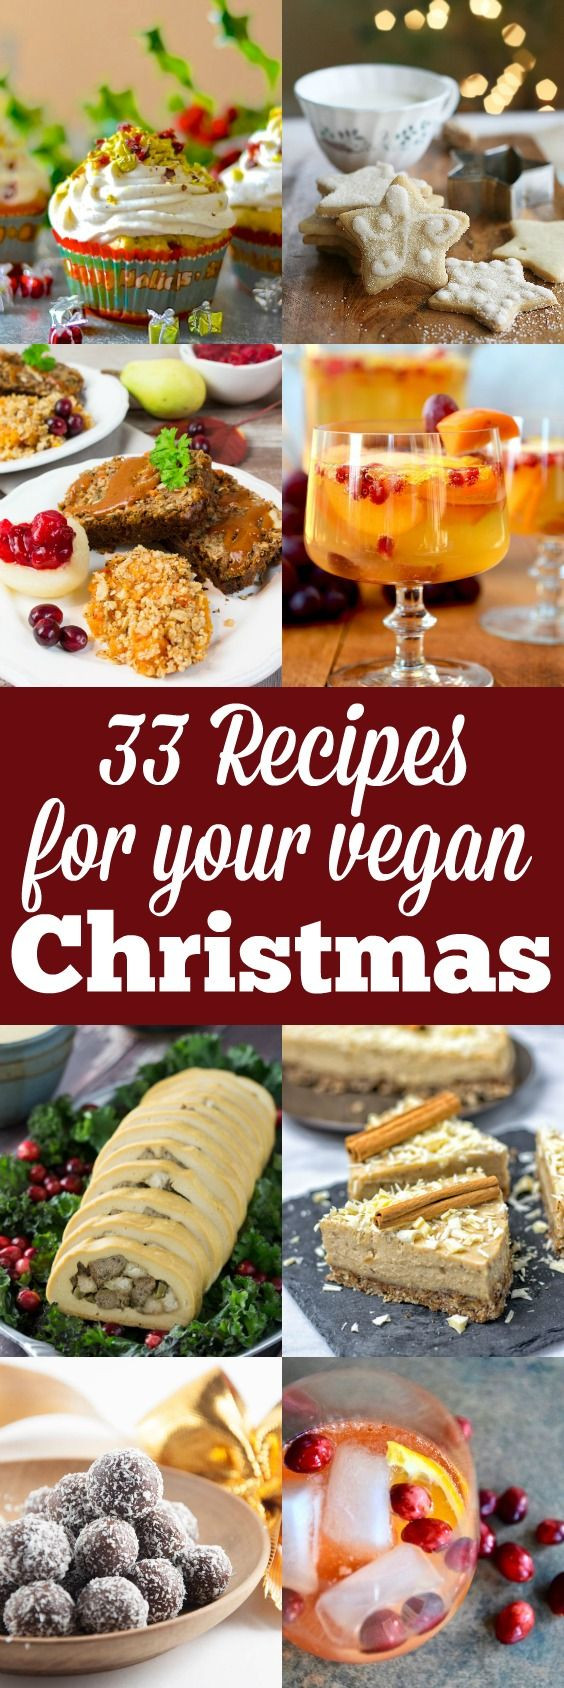 Vegetarian Christmas Desserts
 Best 25 Vegan christmas ideas on Pinterest